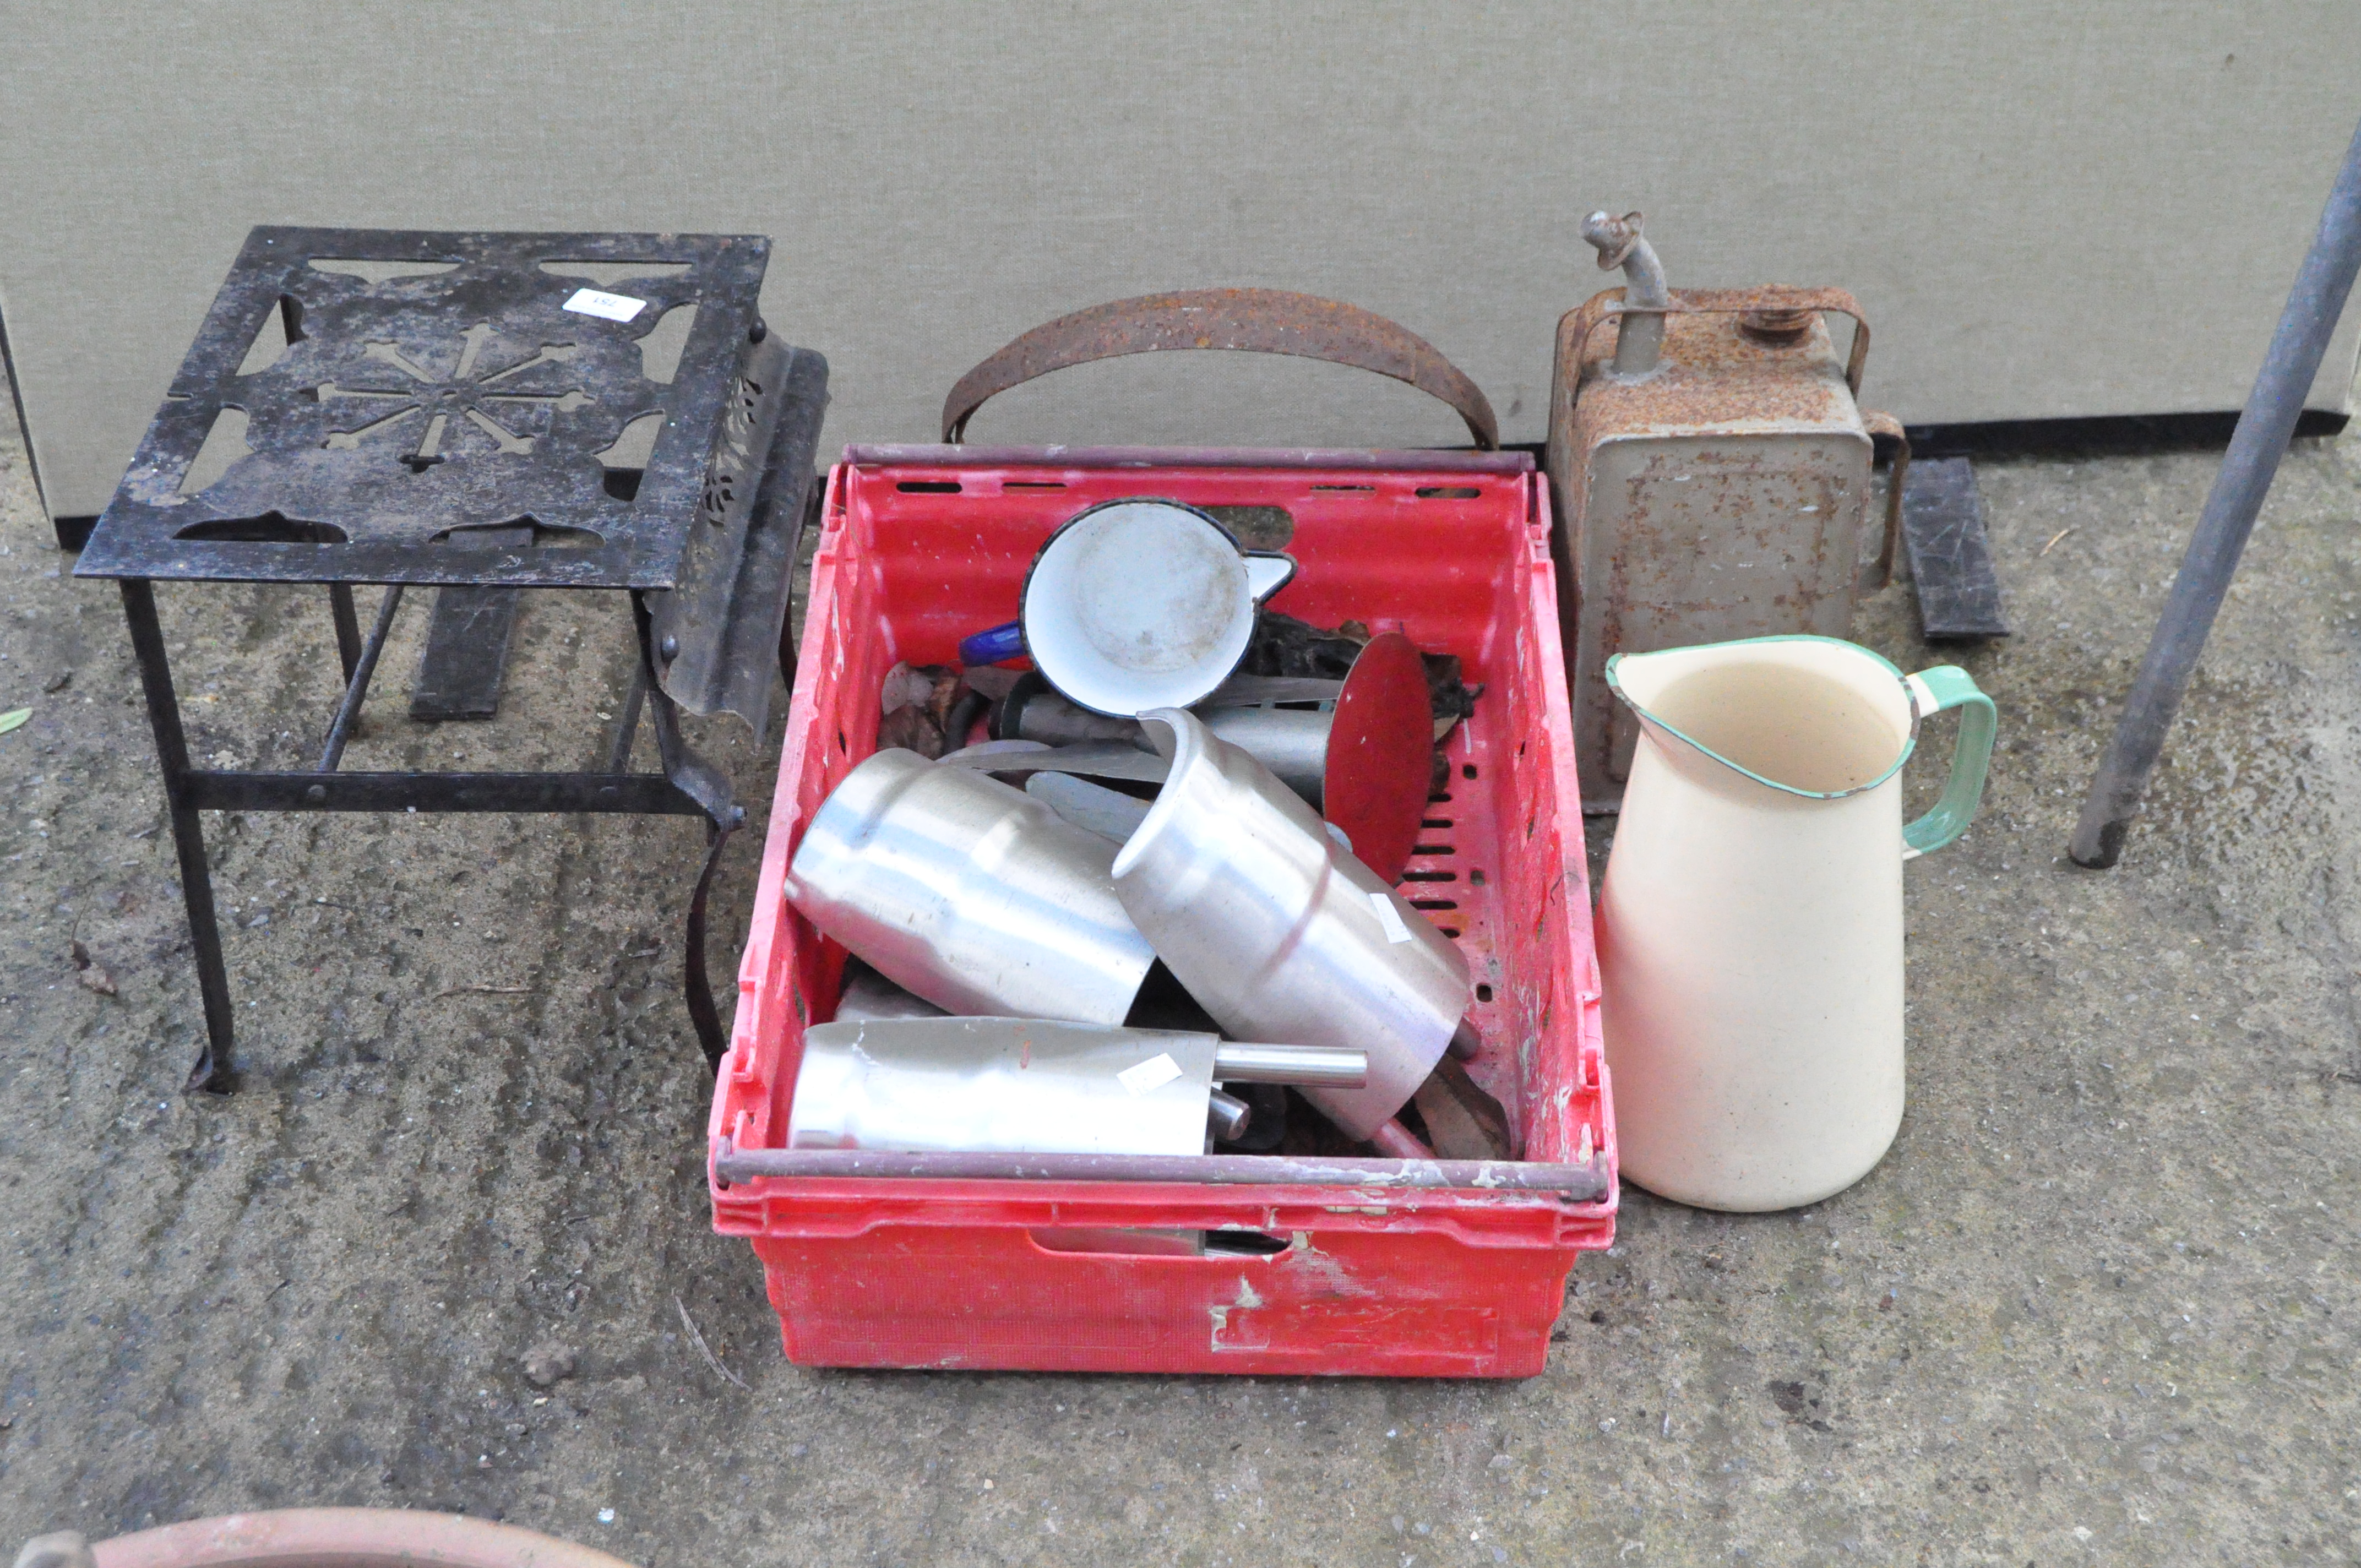 Assorted metalwares, including door stop, enamel pouring jug, fuel can, and more